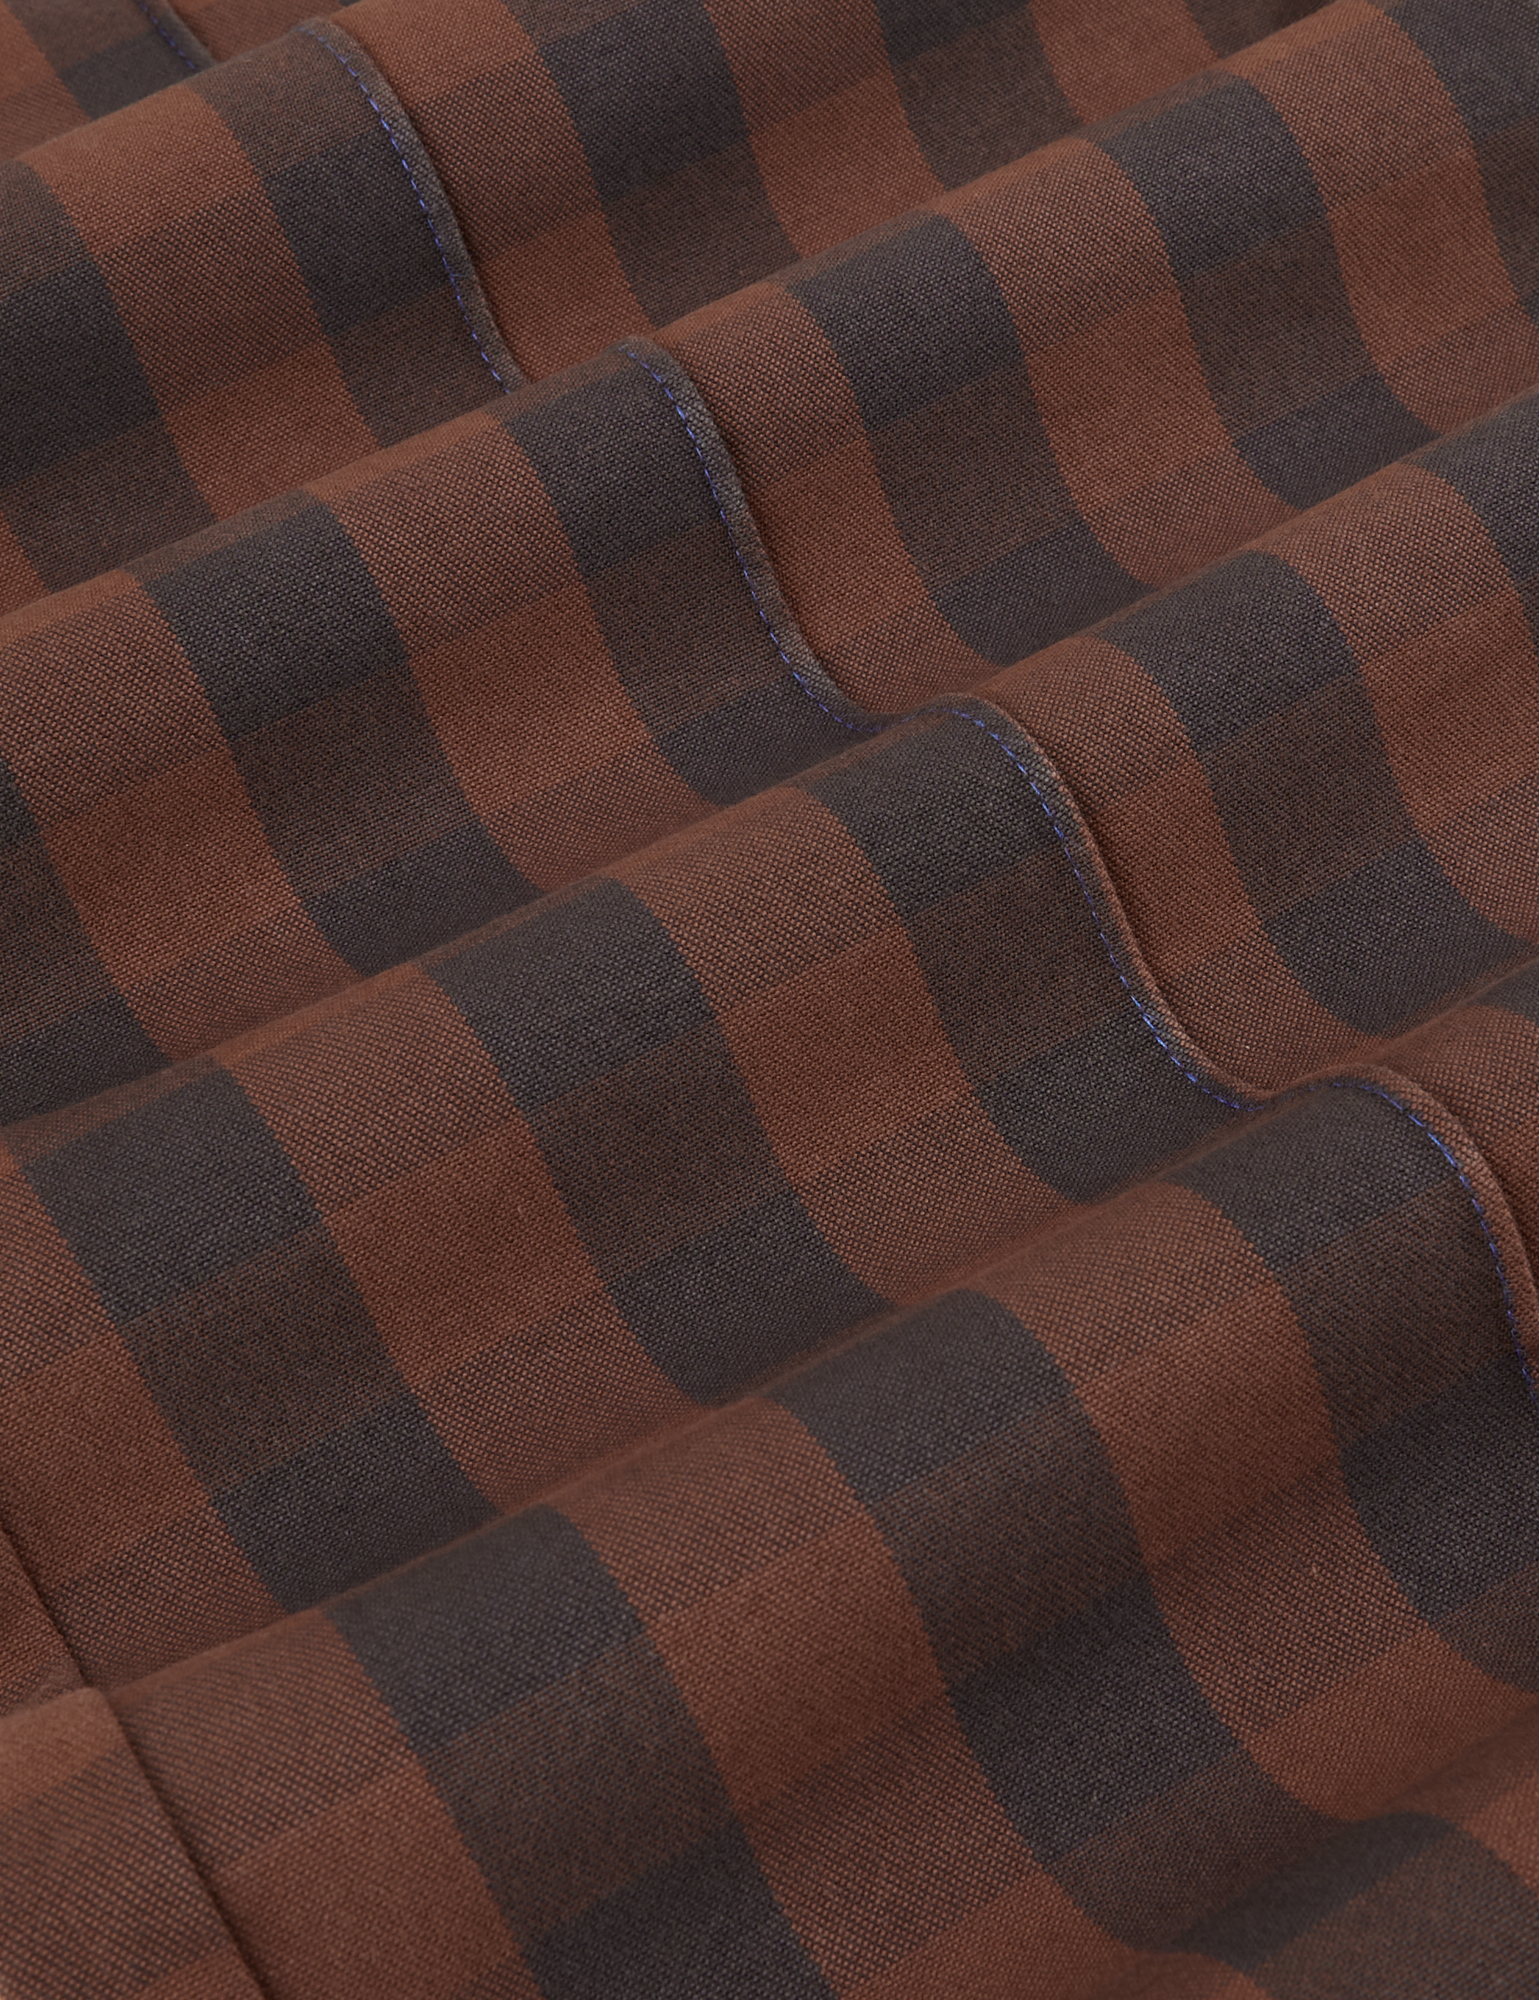 Gingham Western Pants in Fudge Brown fabric detail close up